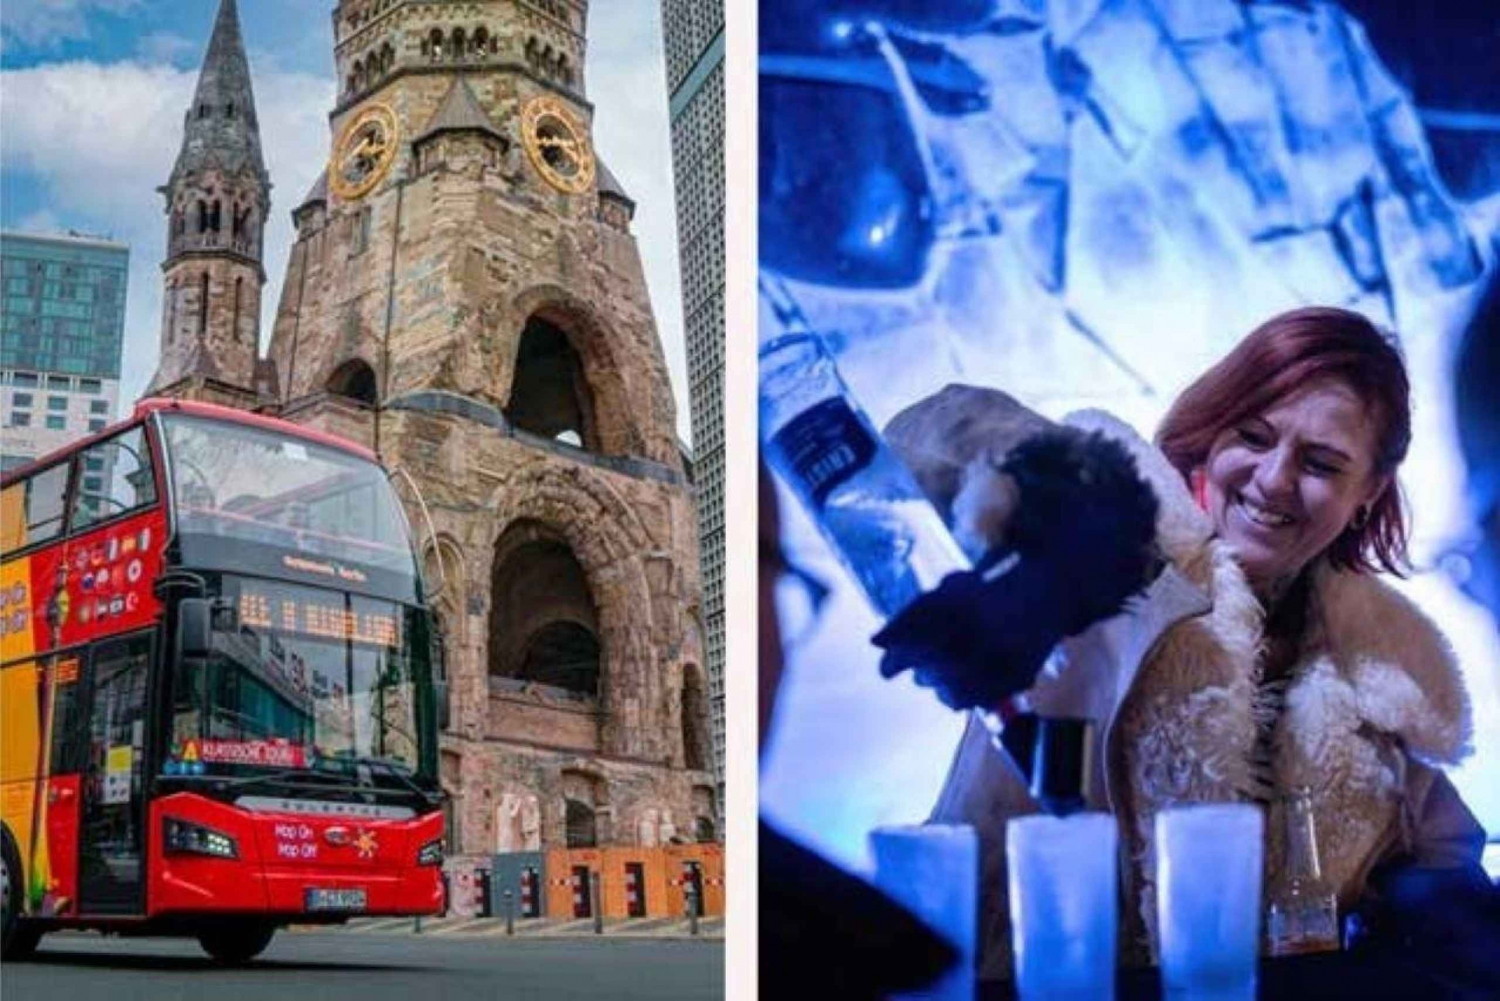 Stadsbezichtiging Berlijn: HOHO Bus - Alle Lijnen (A+B) & Icebar